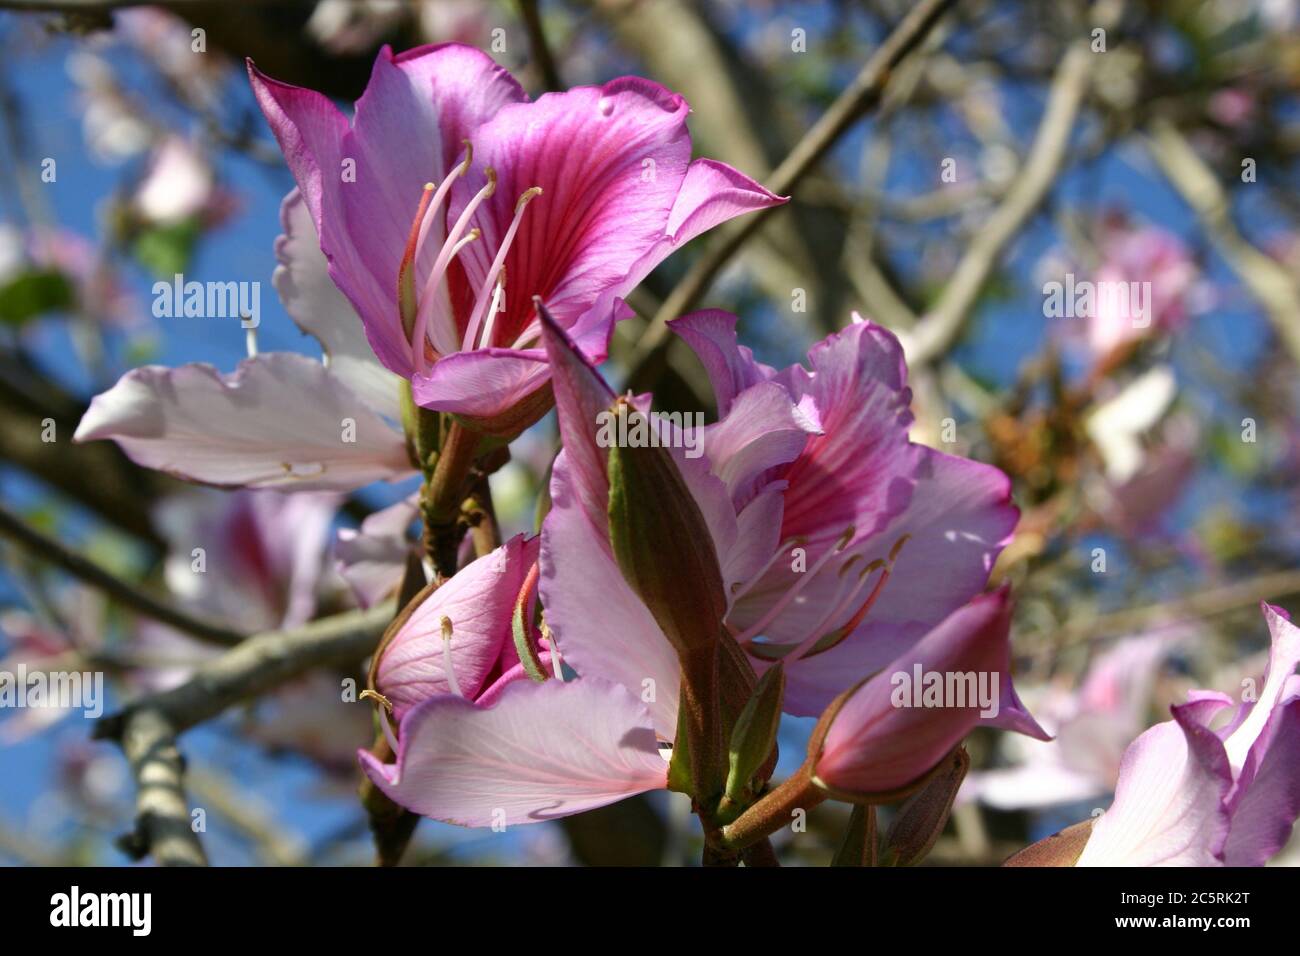 CLOSE-UP OF THE FLOWERS OF THE BEAUTIFUL BAUHINIA TREE, AUSTRALIA. Stock Photo